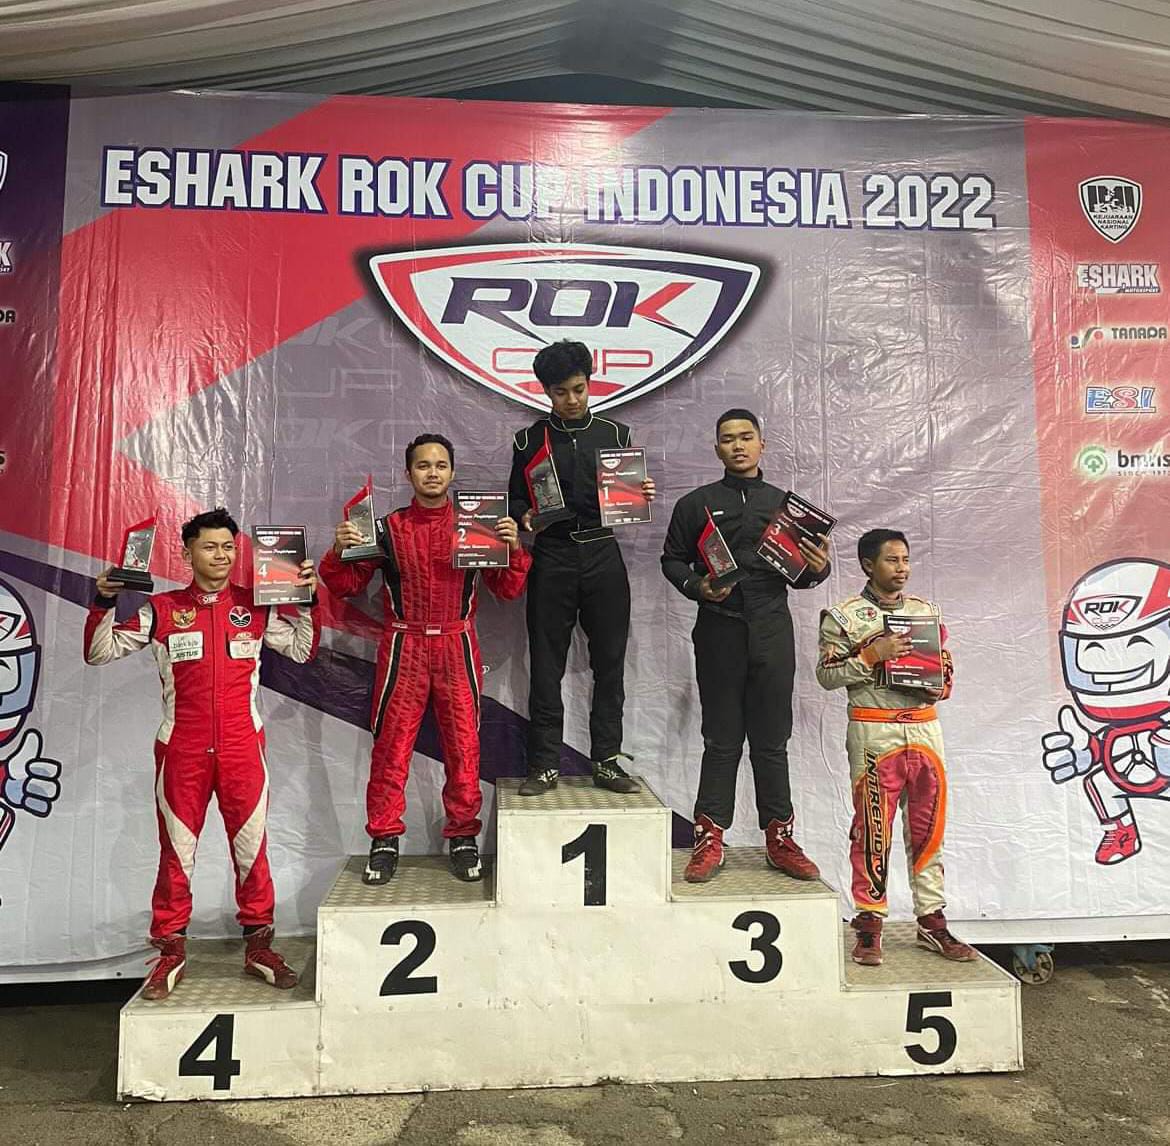 rckt-itb-team-achieves-success-in-2022-indonesia-e-shark-rok-cup